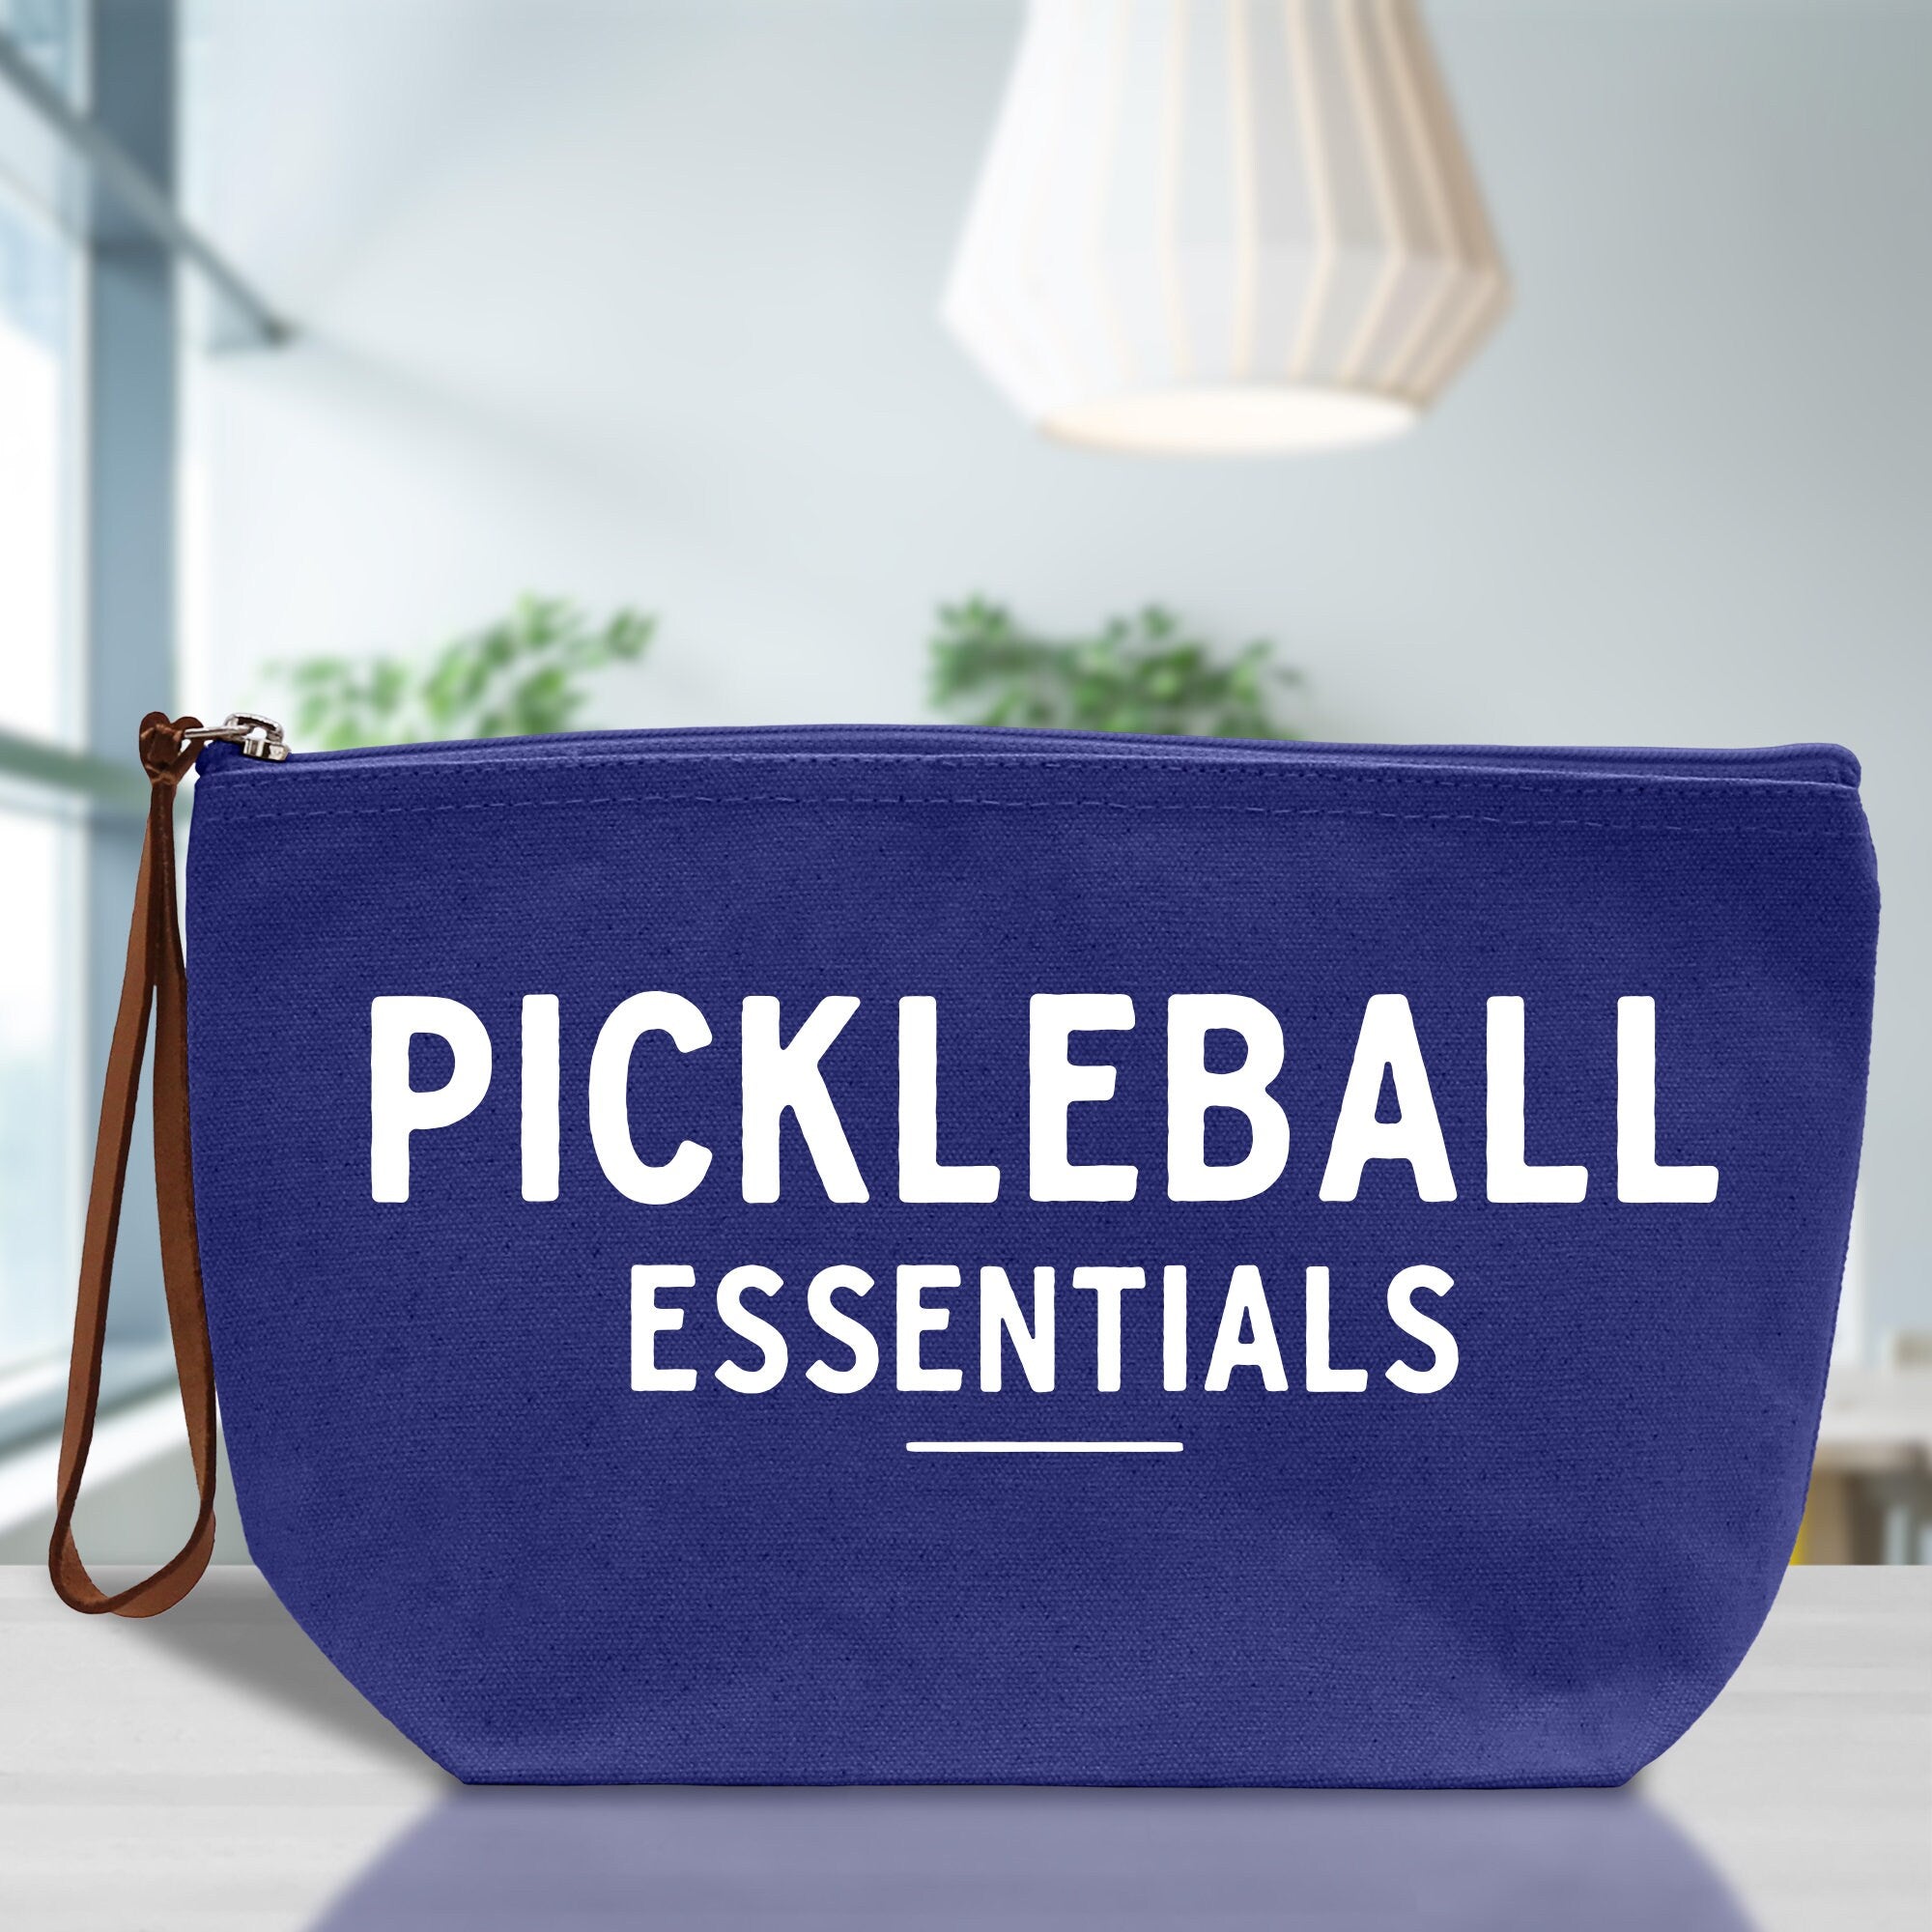 Pickleball Cosmetic Zipper Pouch Tote Bag Pickleball Party Favors Pickleball Player Gift Pickleball Make Up Bag Pickleball Toiletry Bag